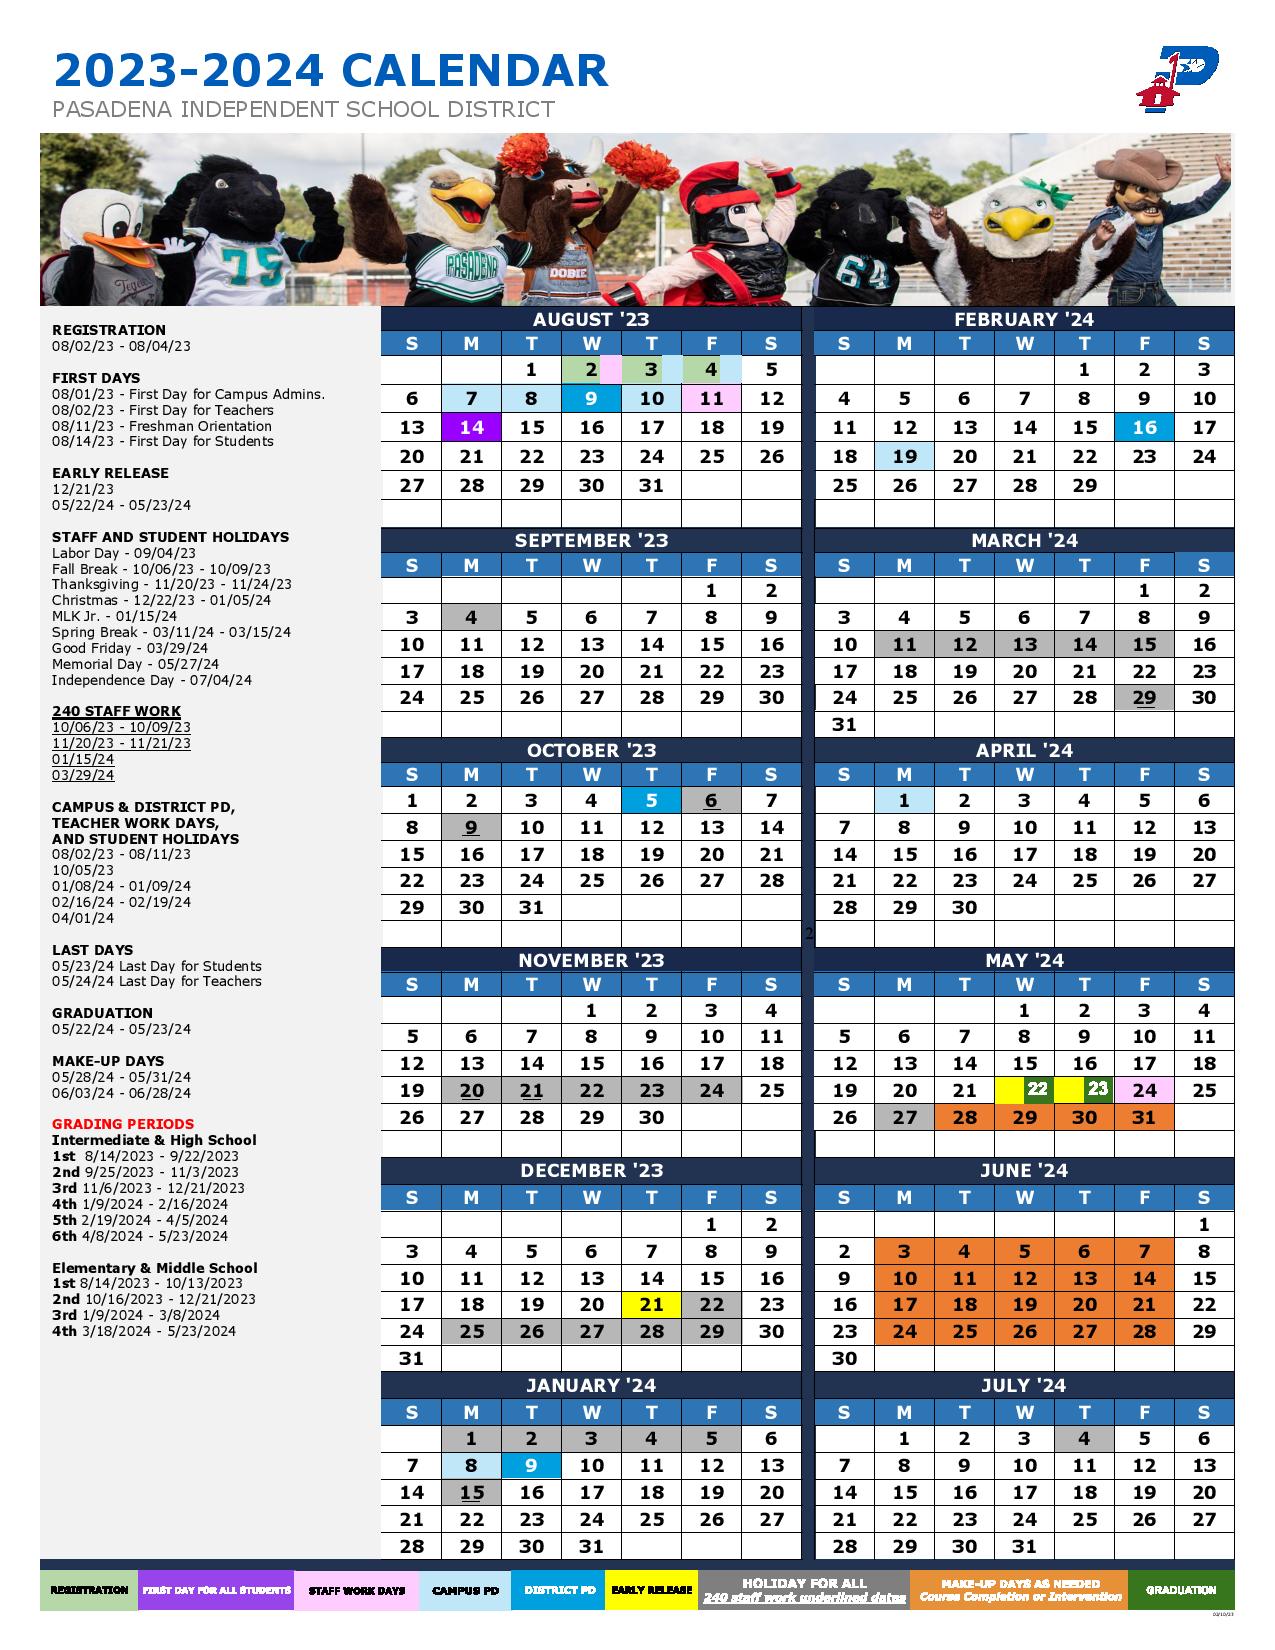 Pasadena Independent School District Calendar 20232024